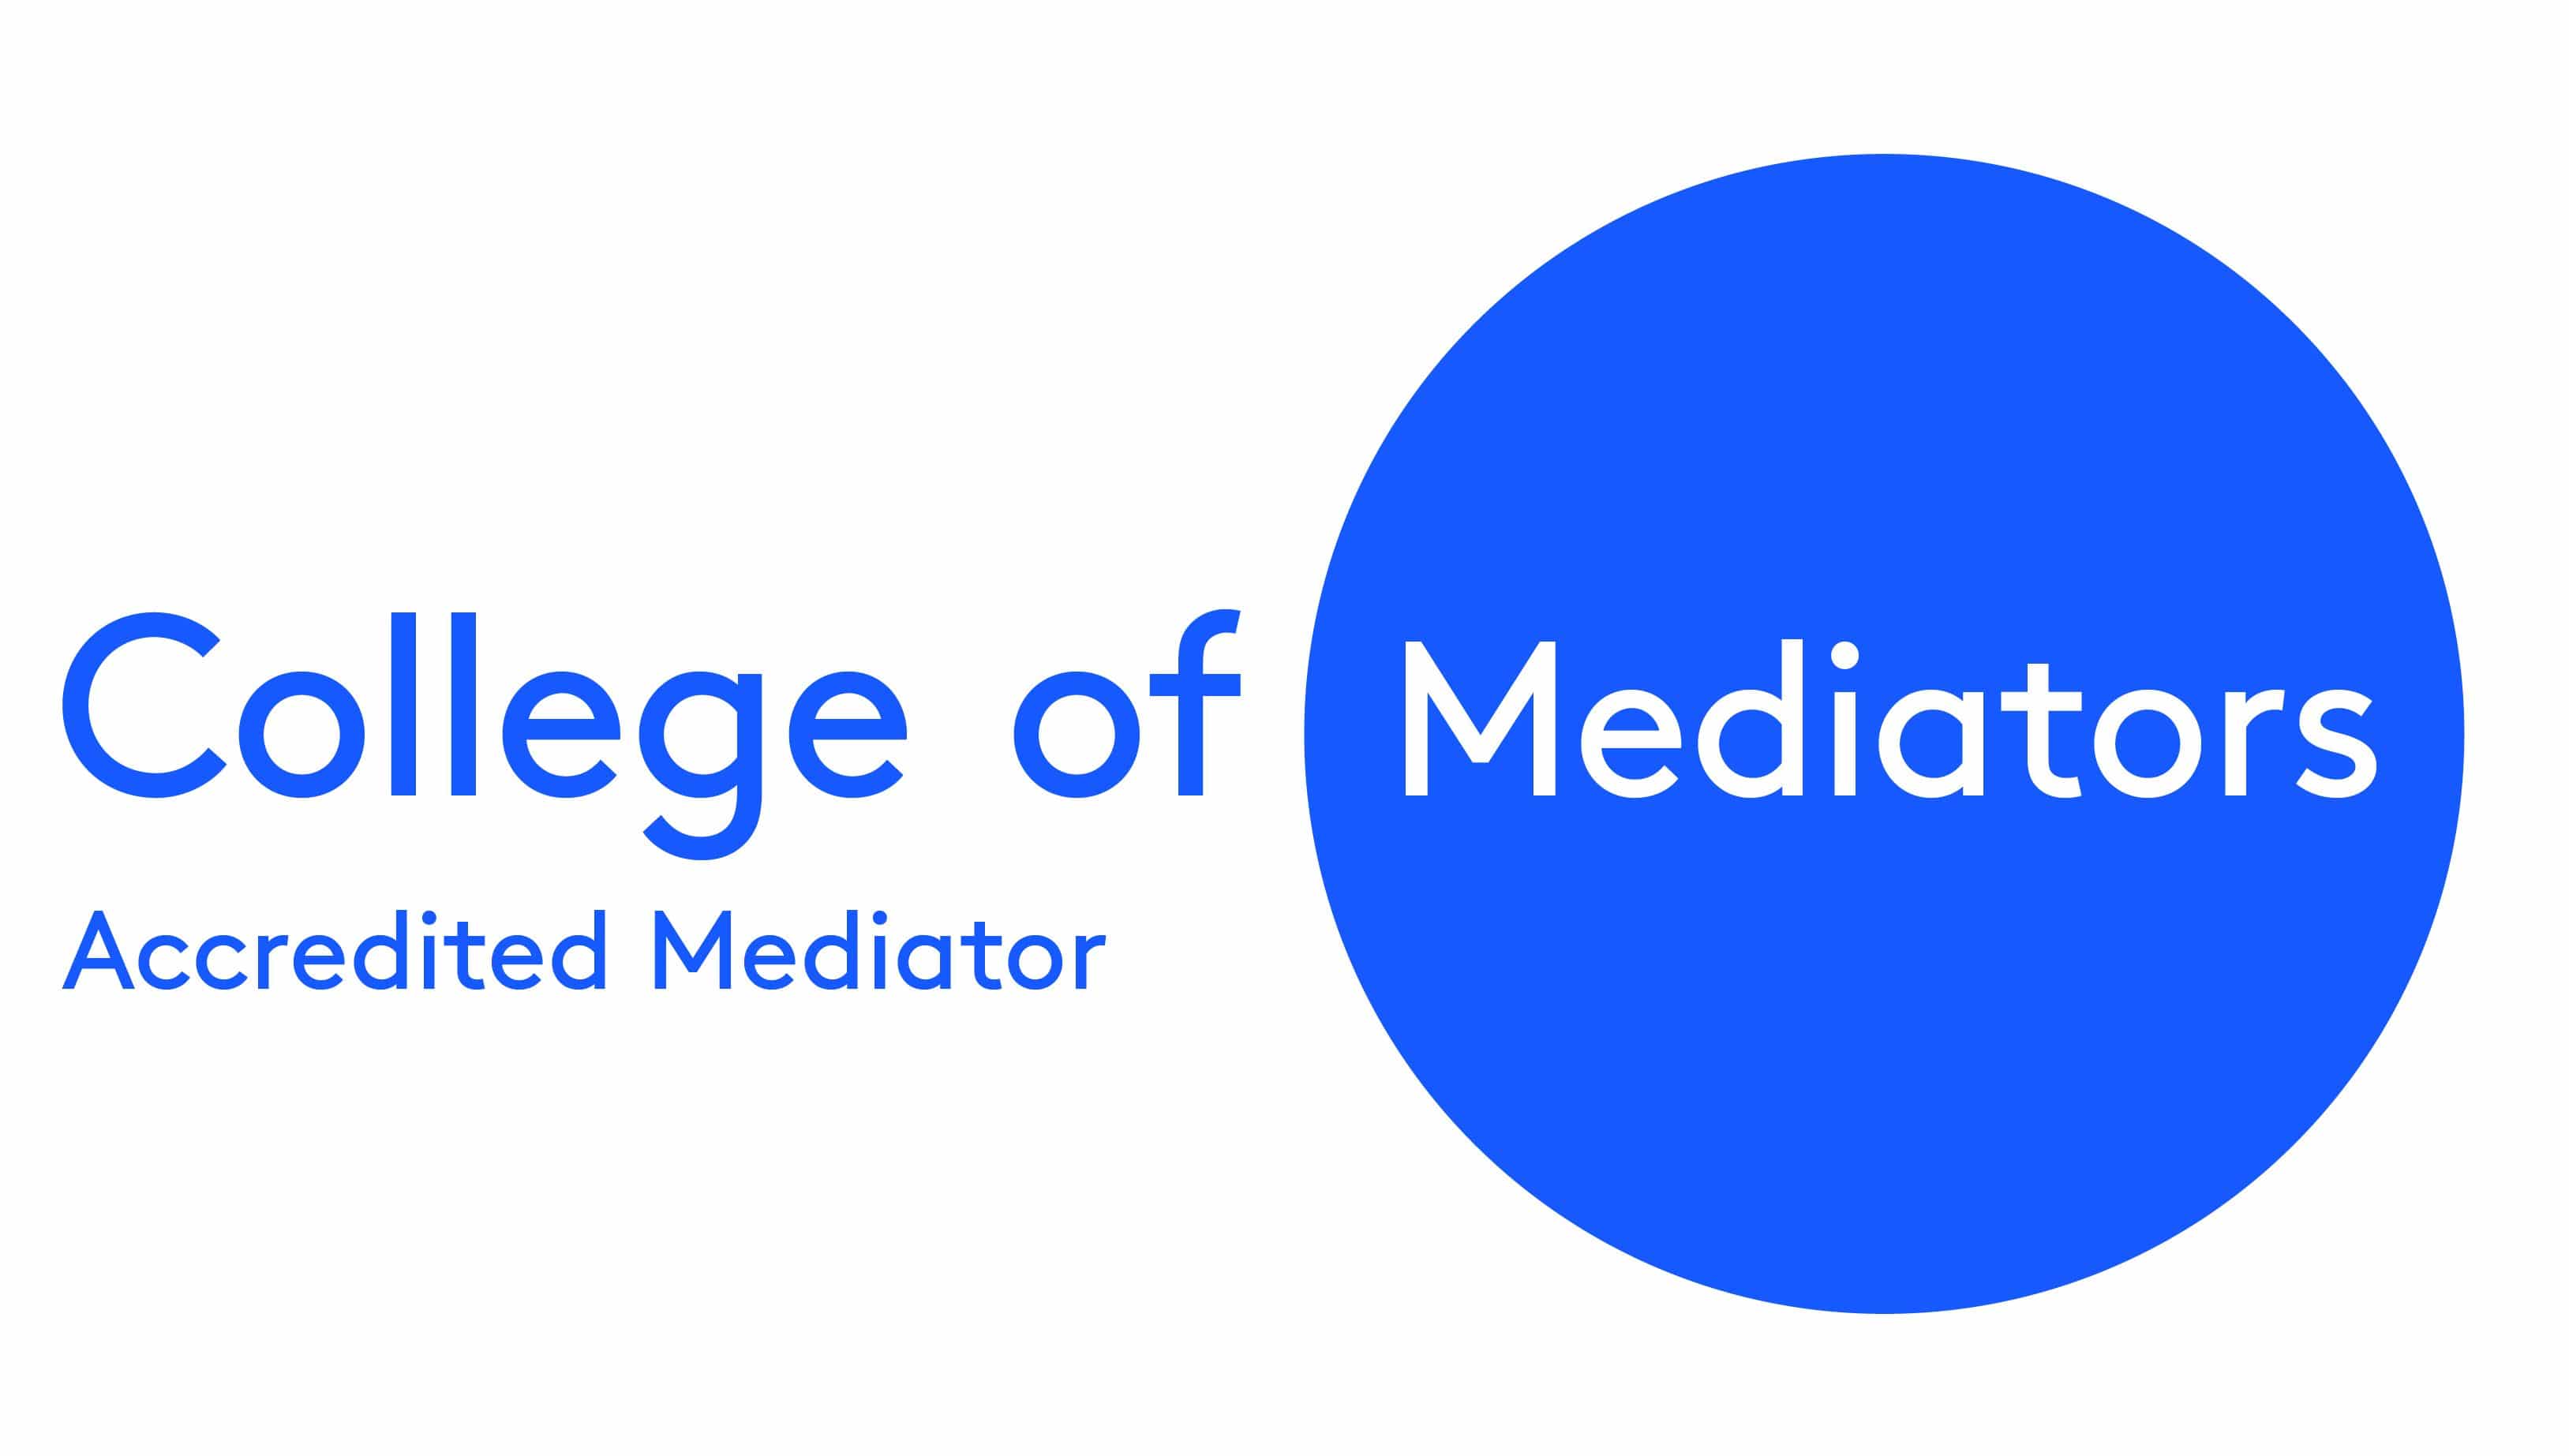 College of Mediators accredited